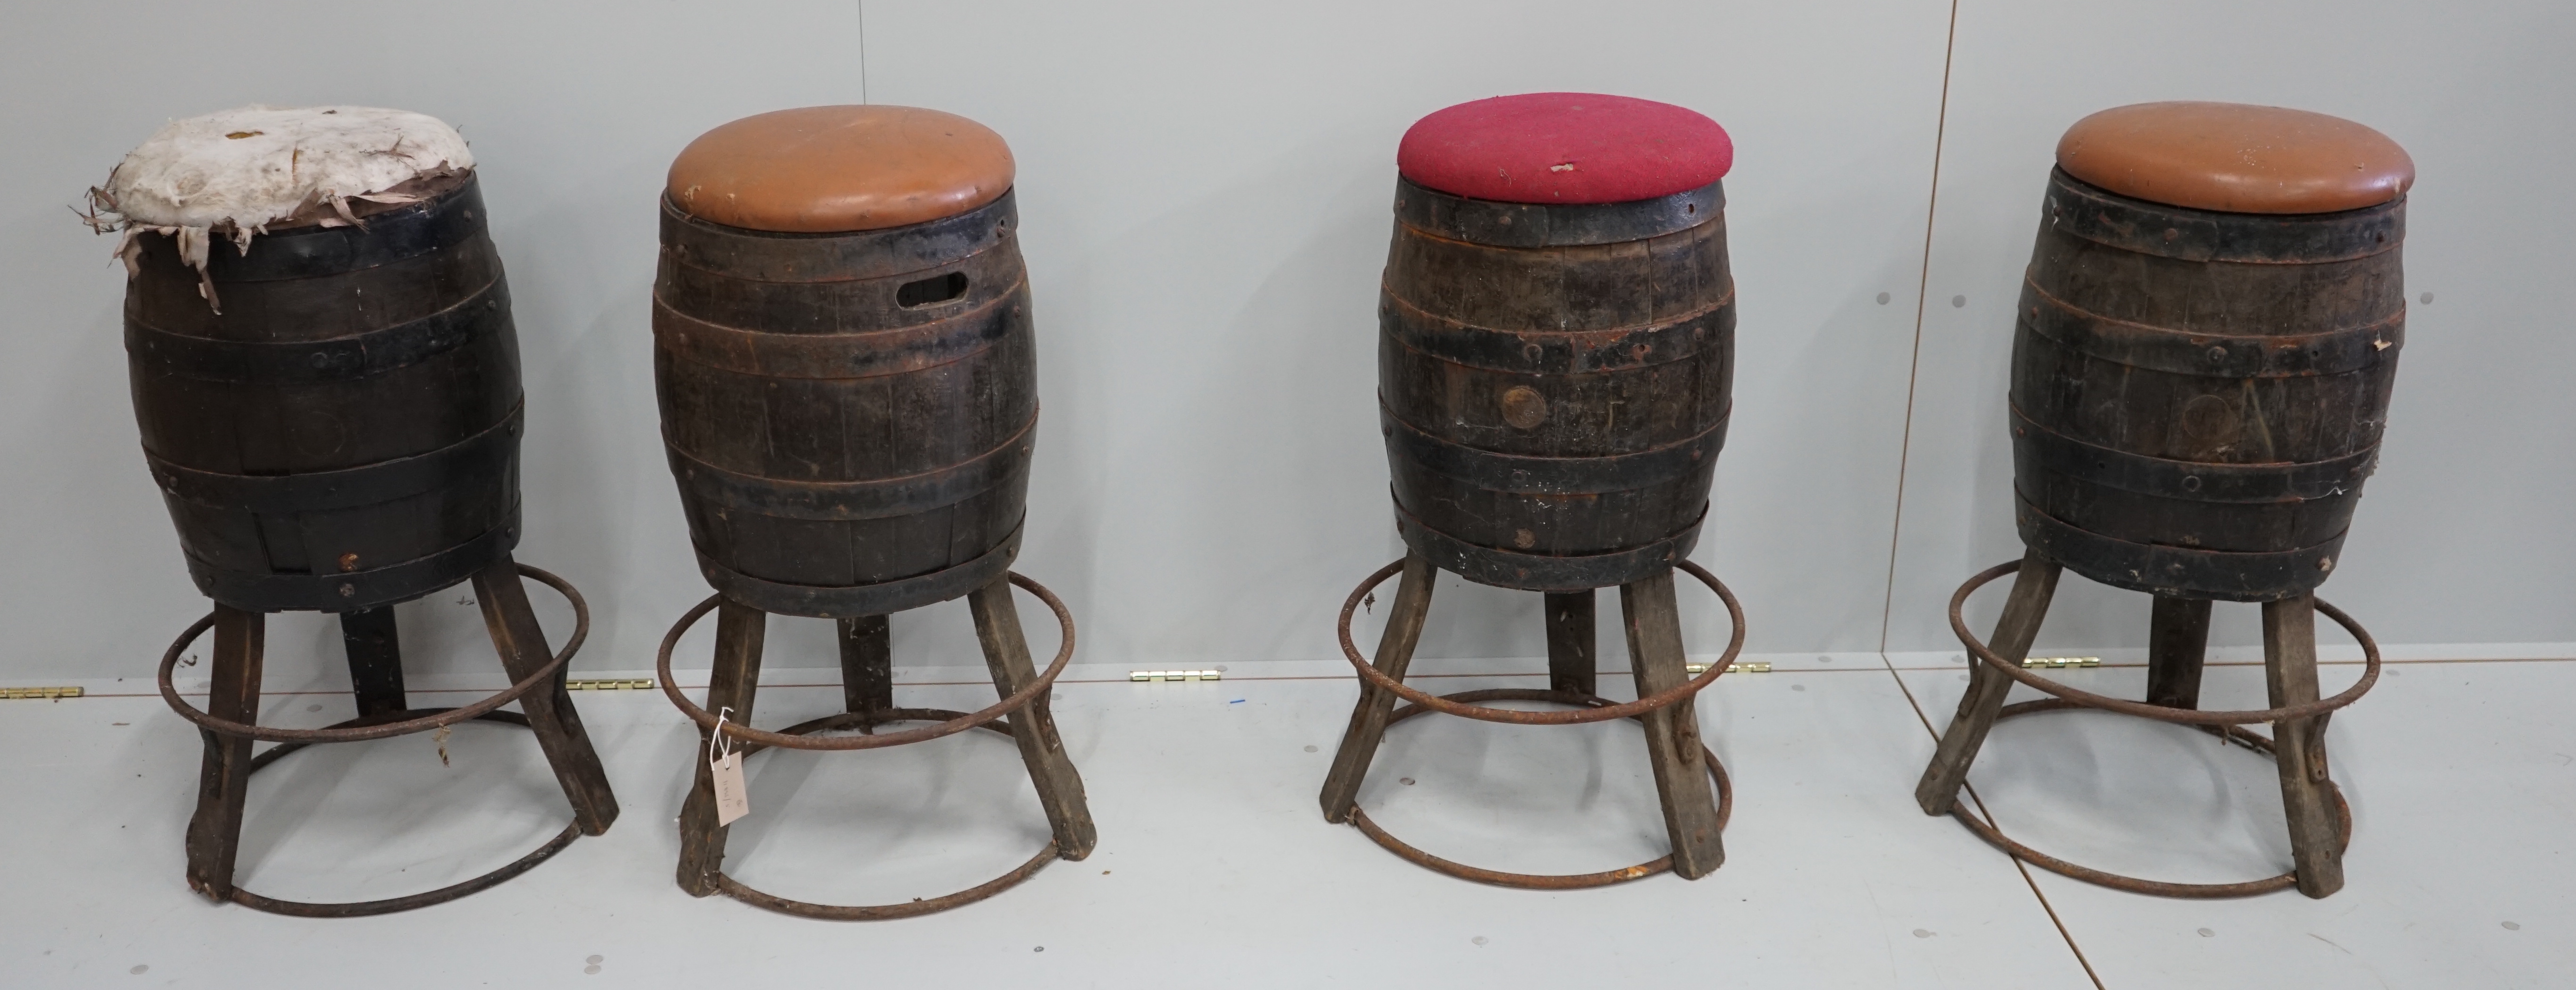 A set of four barrel bar stools, height 73cm